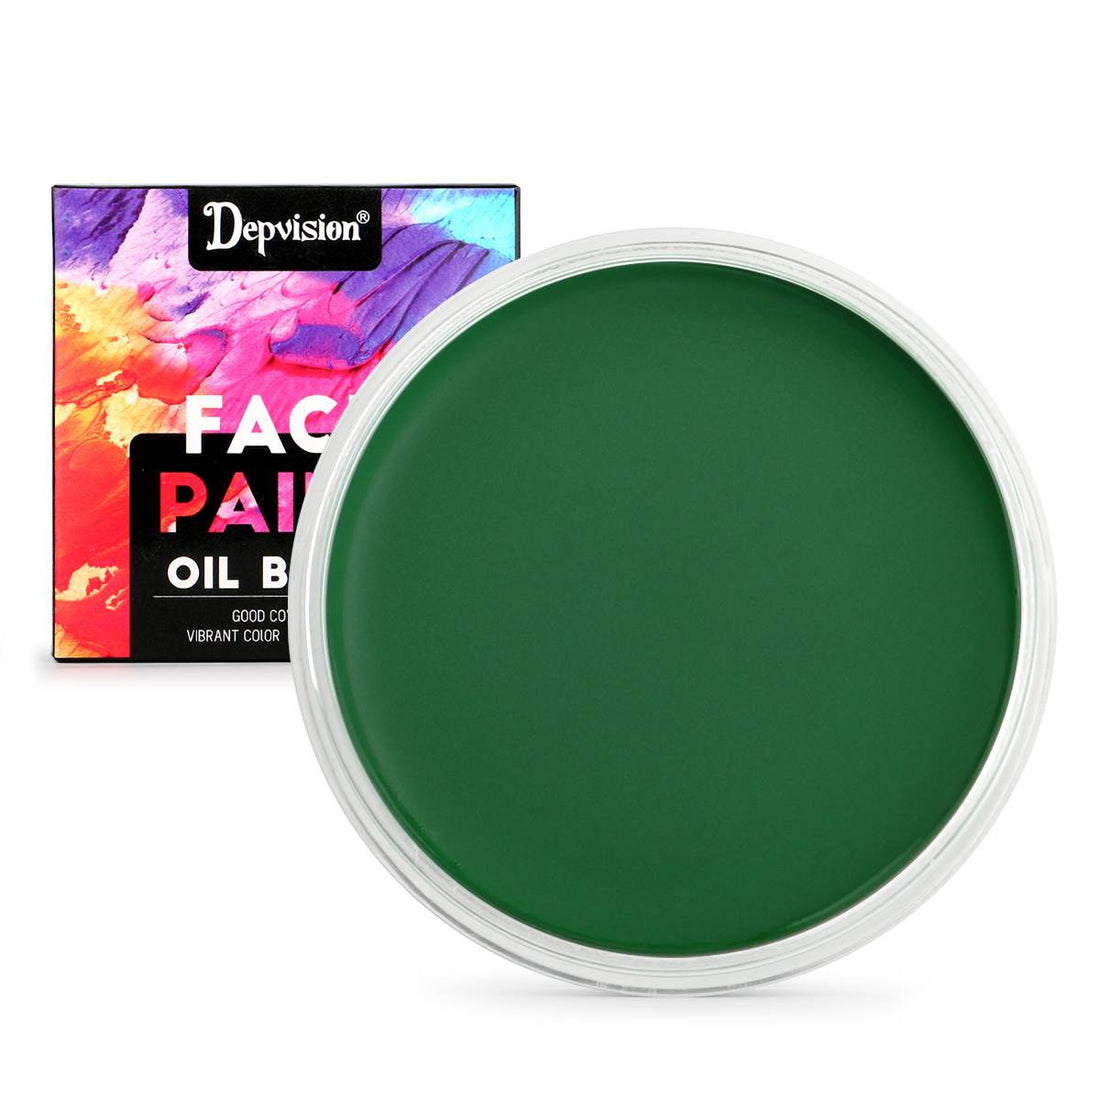 Waterproof Oil Based Face Paint - Green